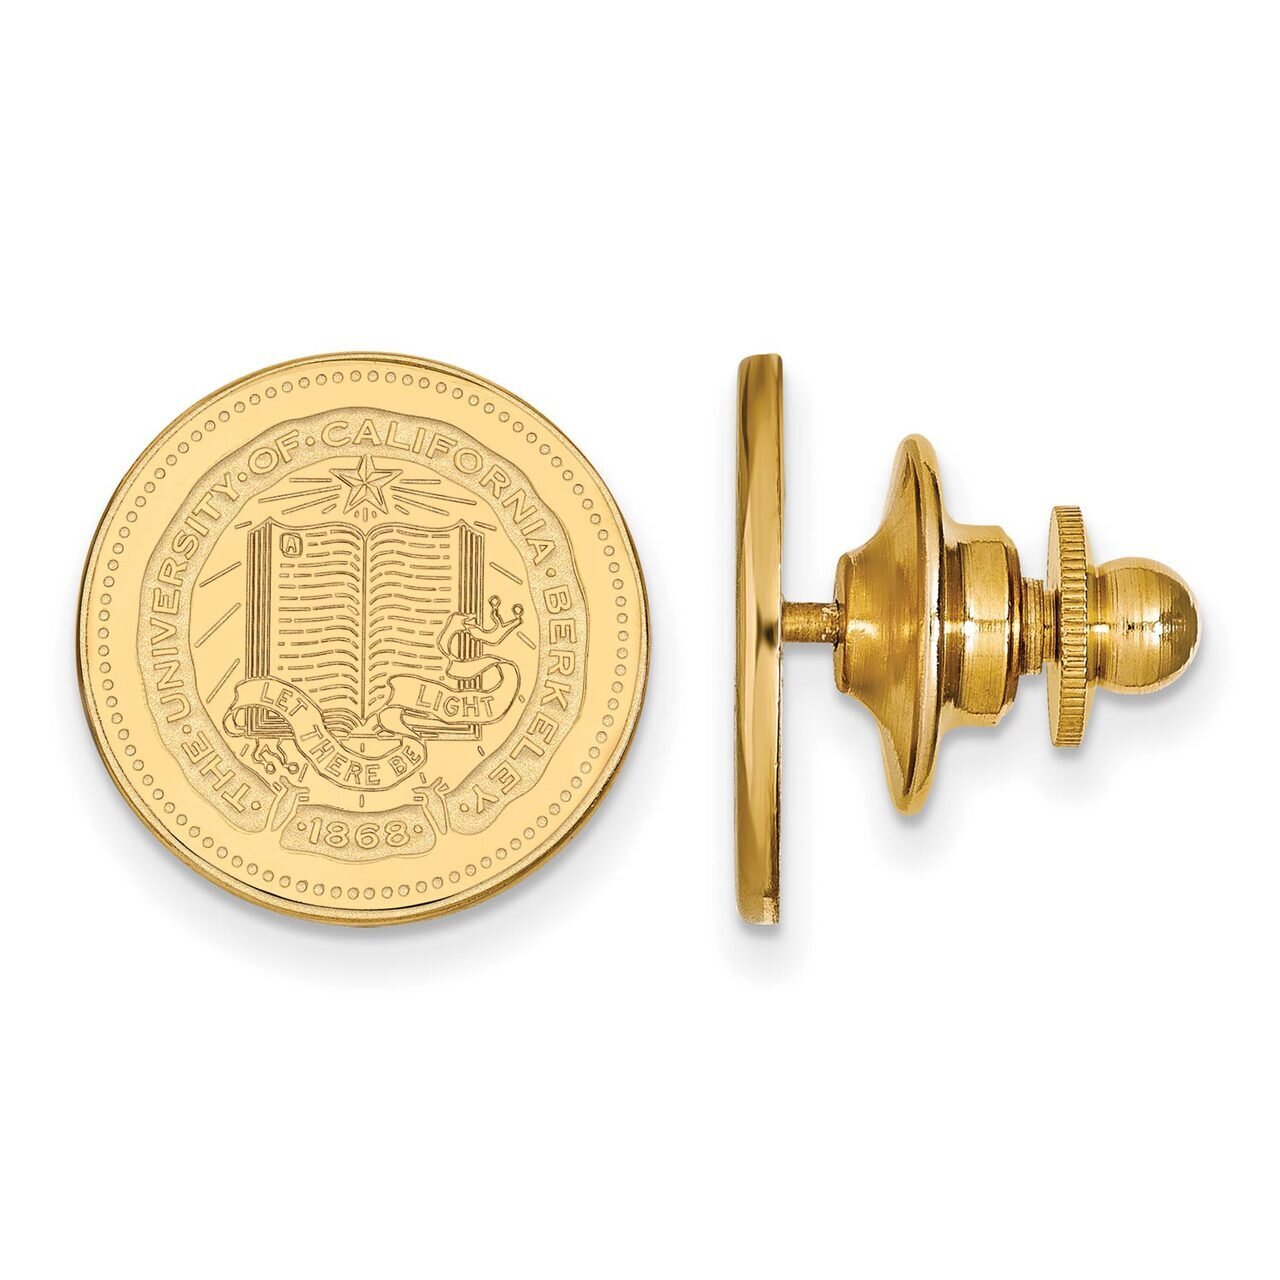 University of California Berkeley Crest Lapel Pin Gold-plated Silver GP040UCB